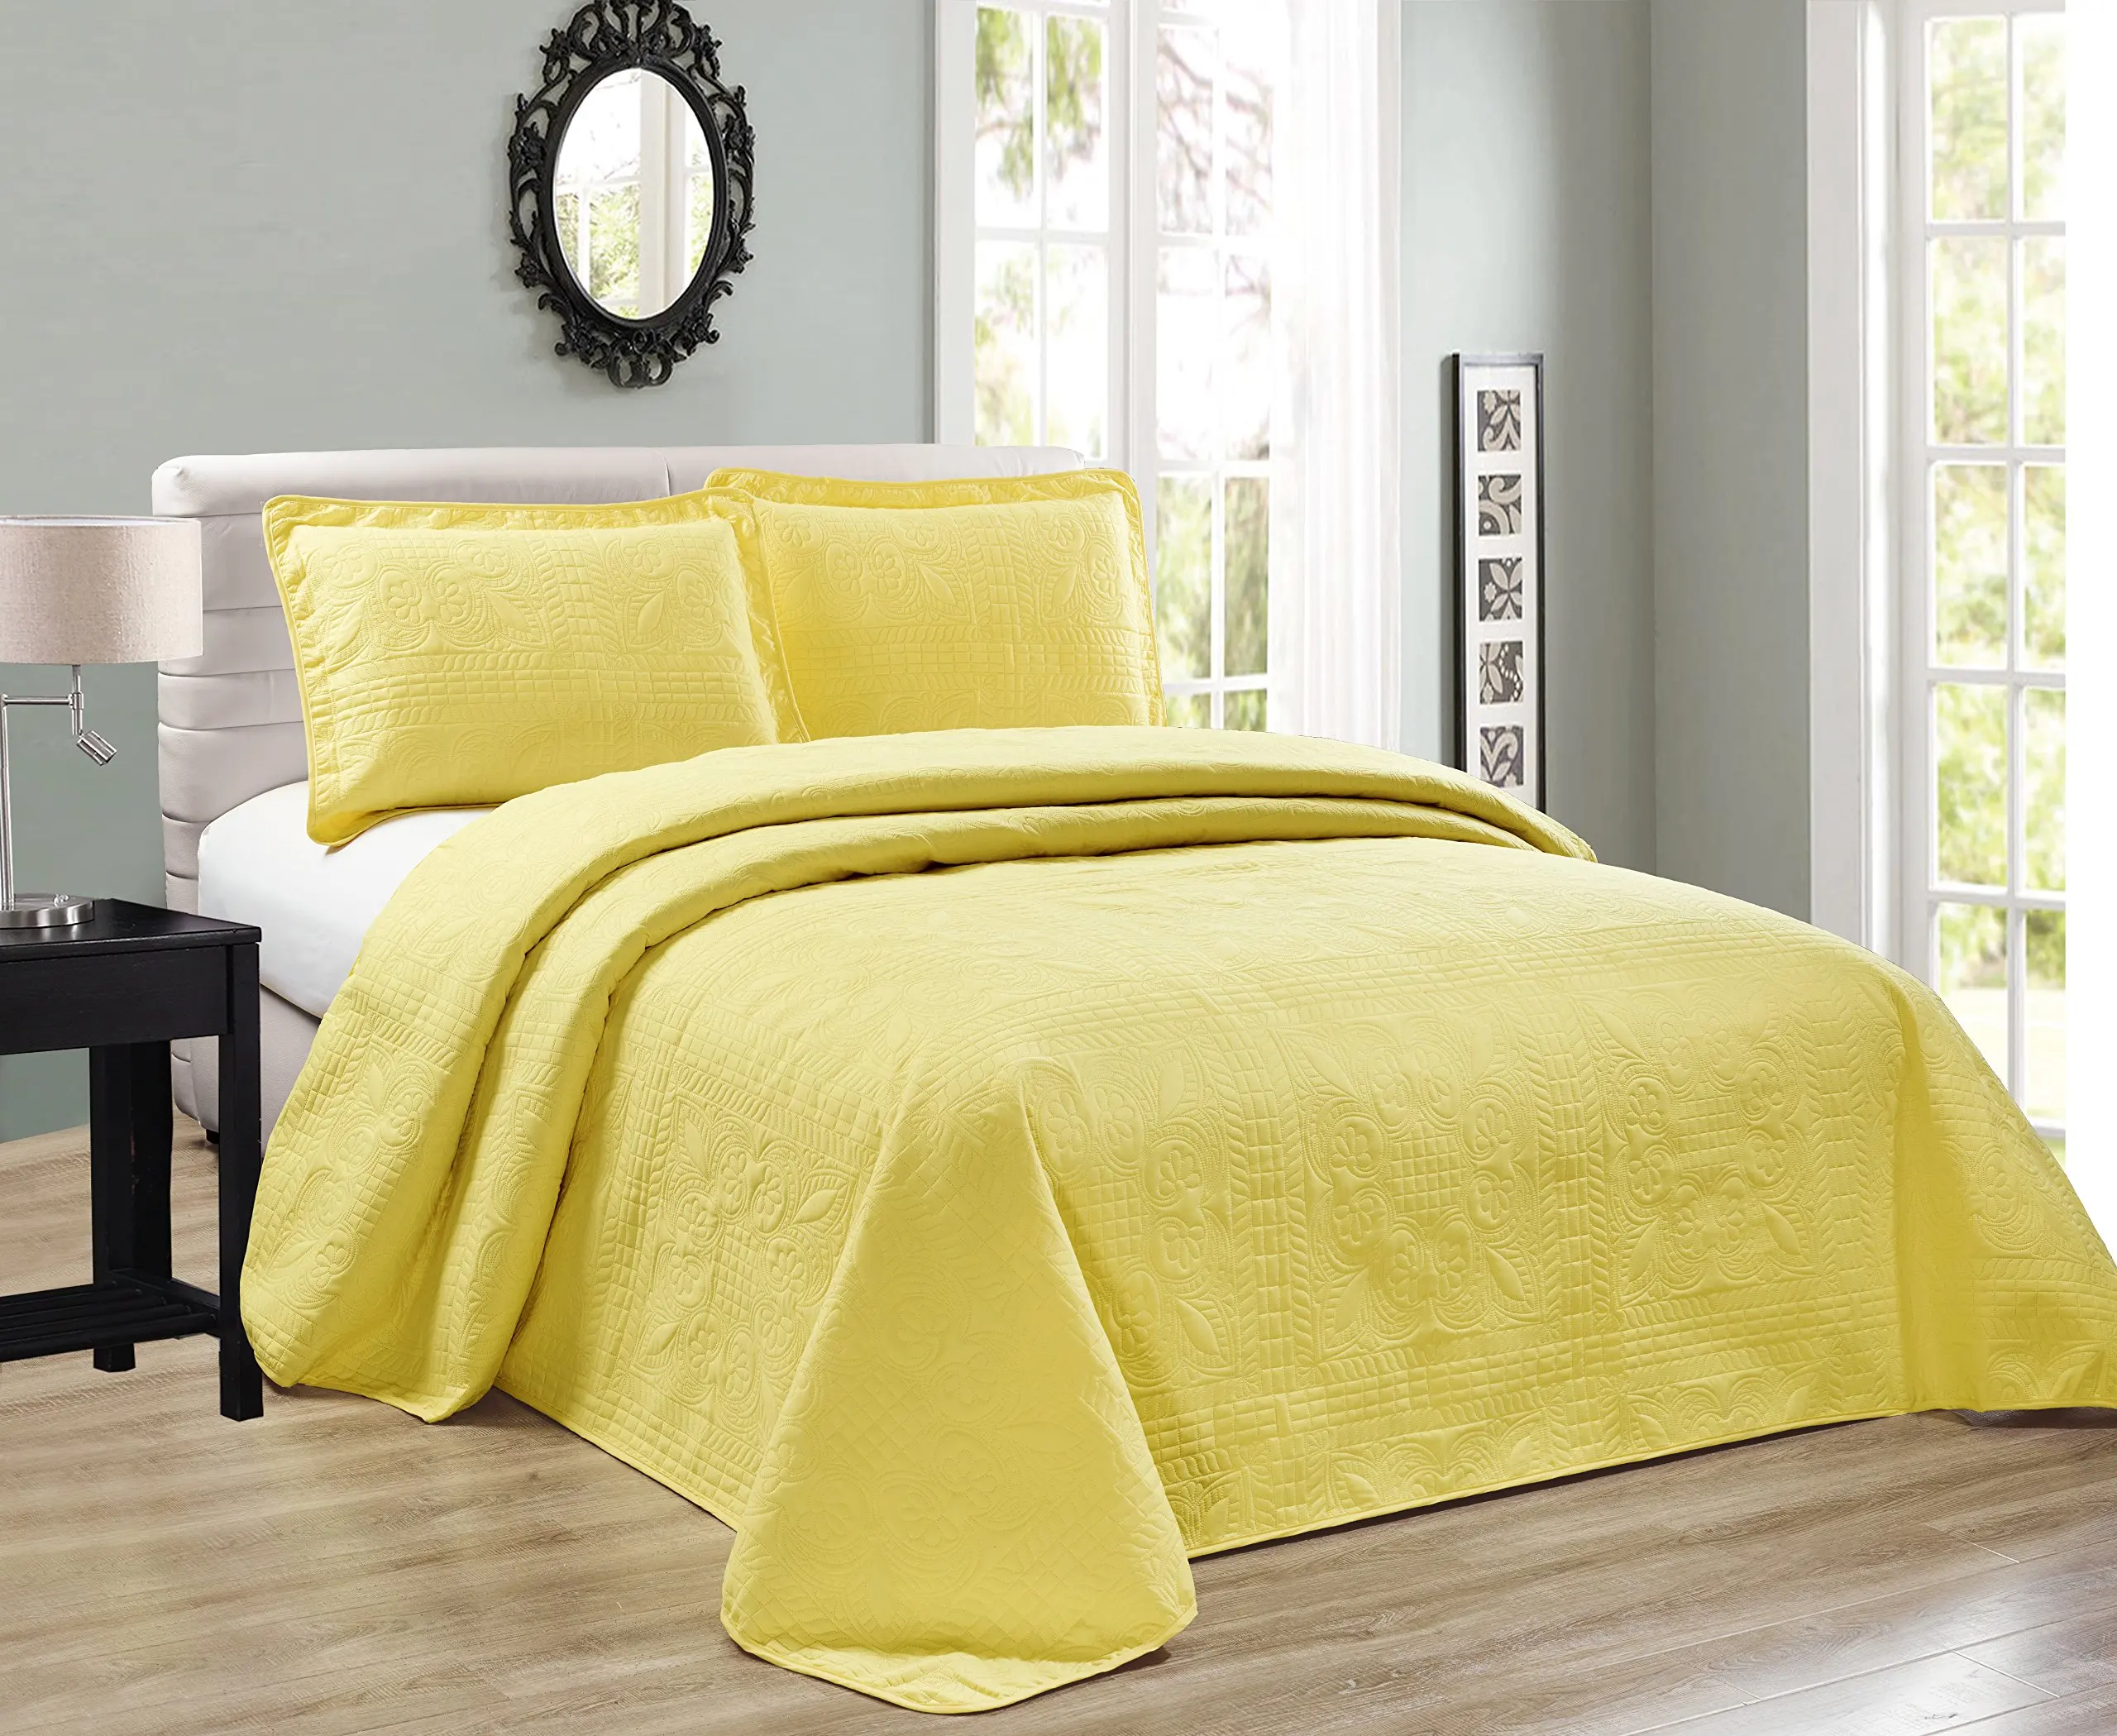 Buy 7 Piece Yellow Floral Queen Size Comforter Set ...